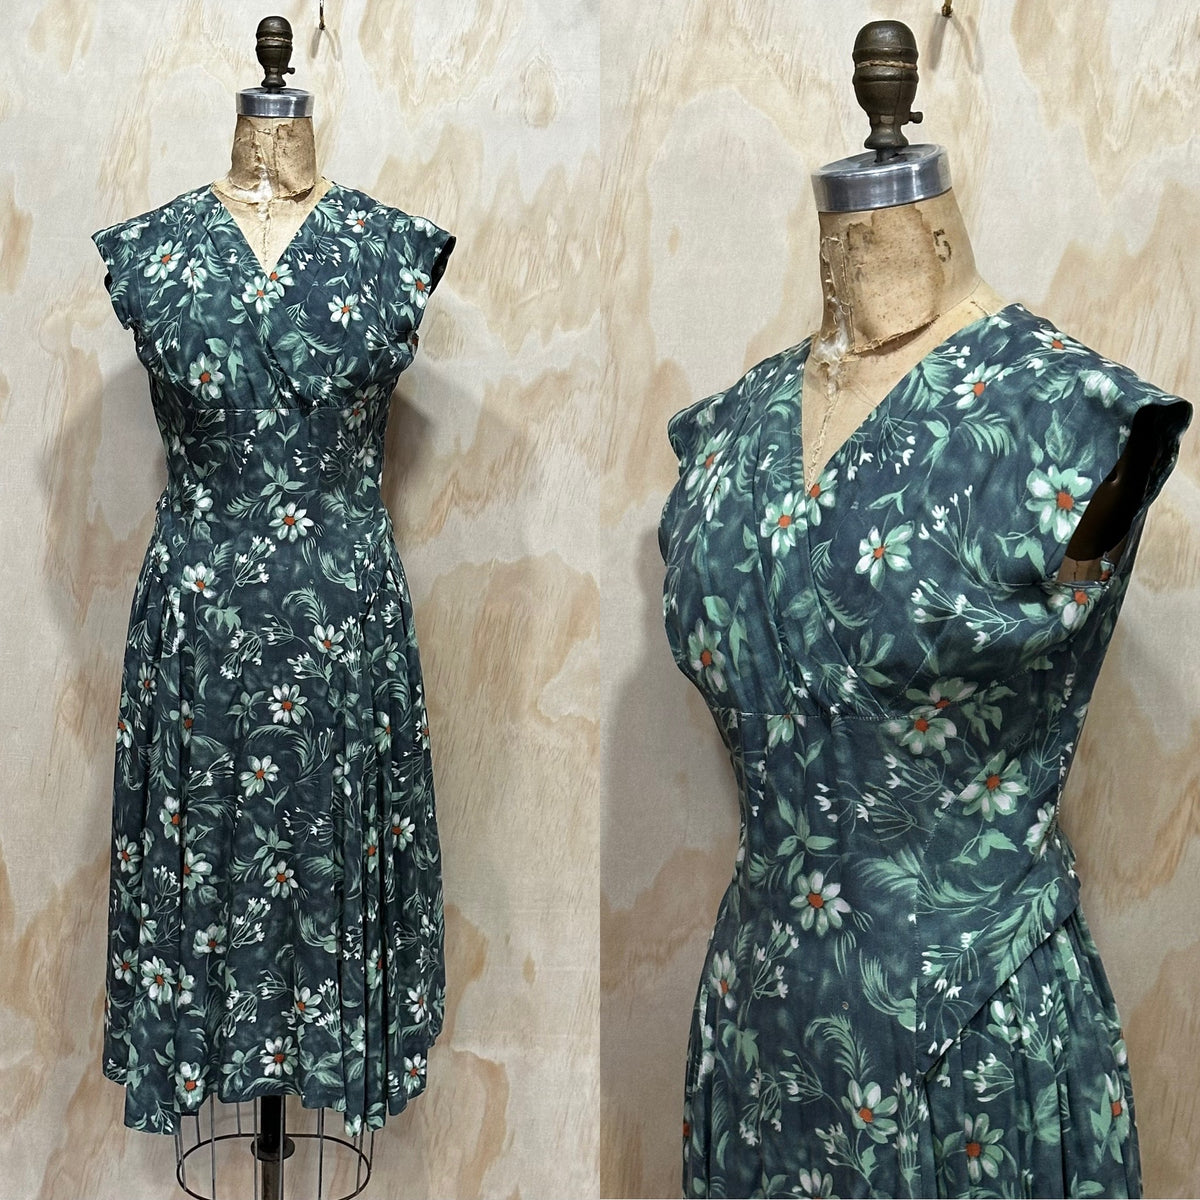 Vintage 50s/60s Green Floral Swing Dress